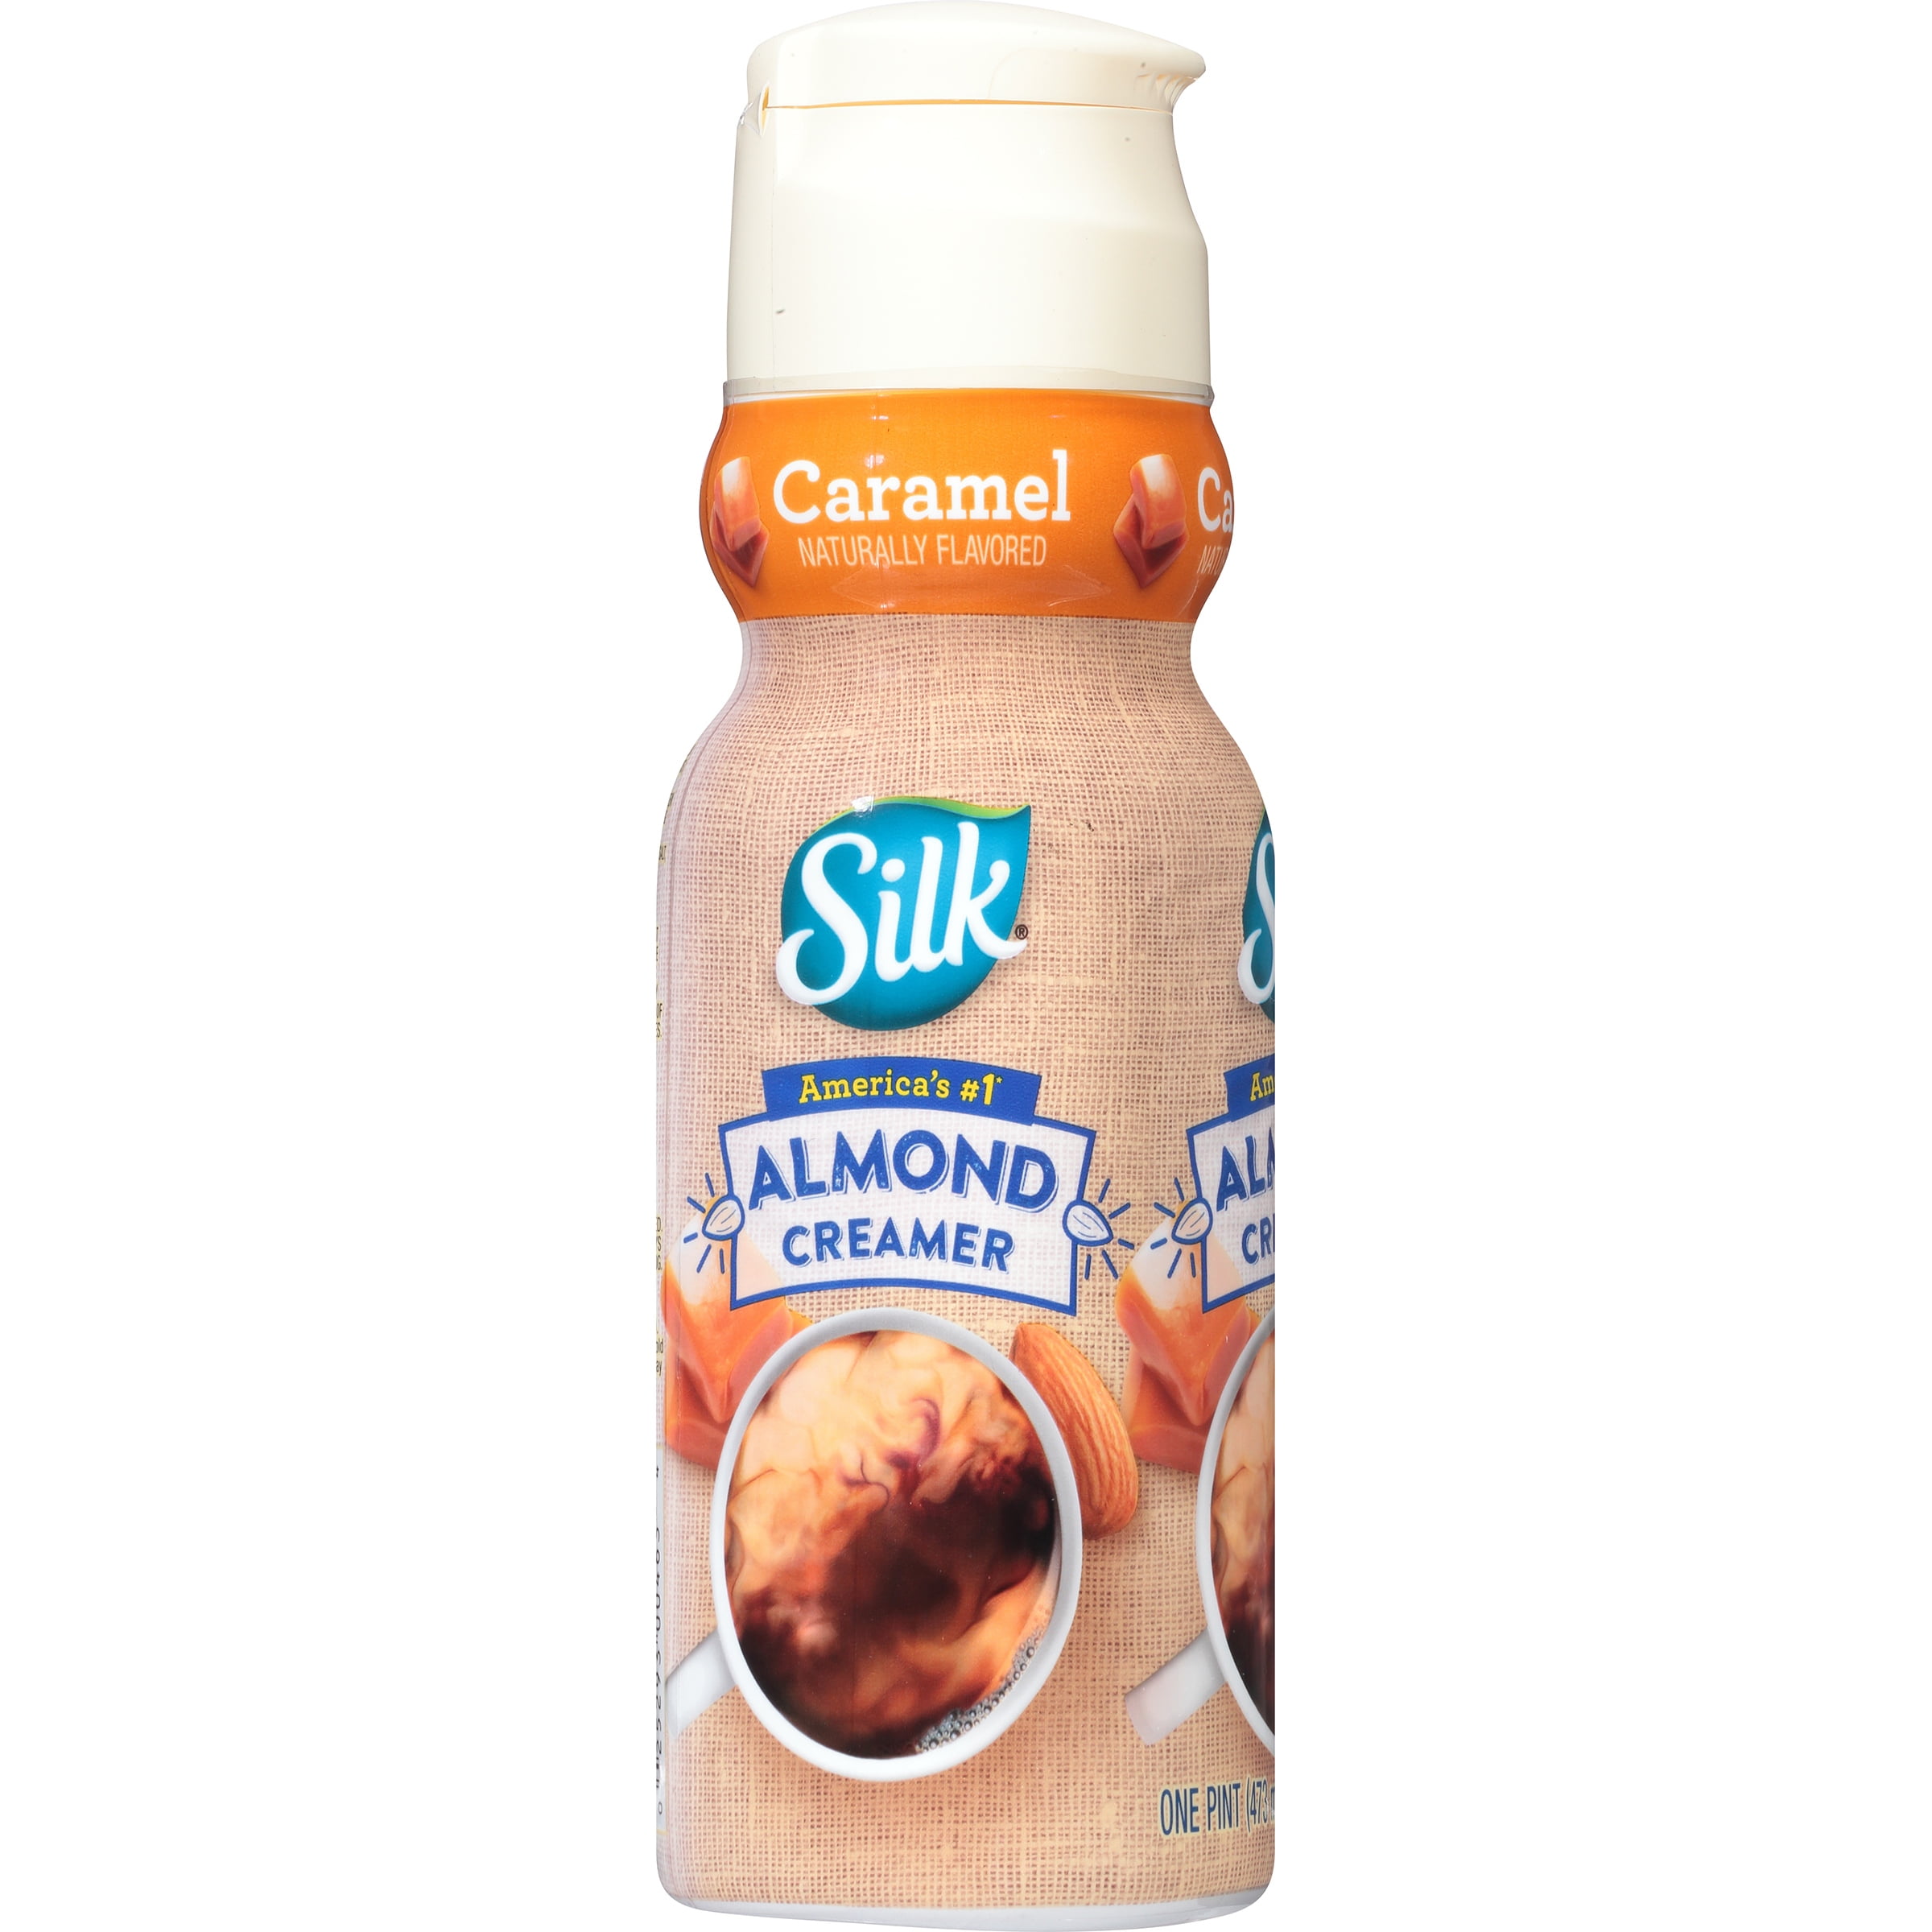 Silk, Caramel Non Dairy Almond Creamer, 10 Fl. Oz.   Walmart.com